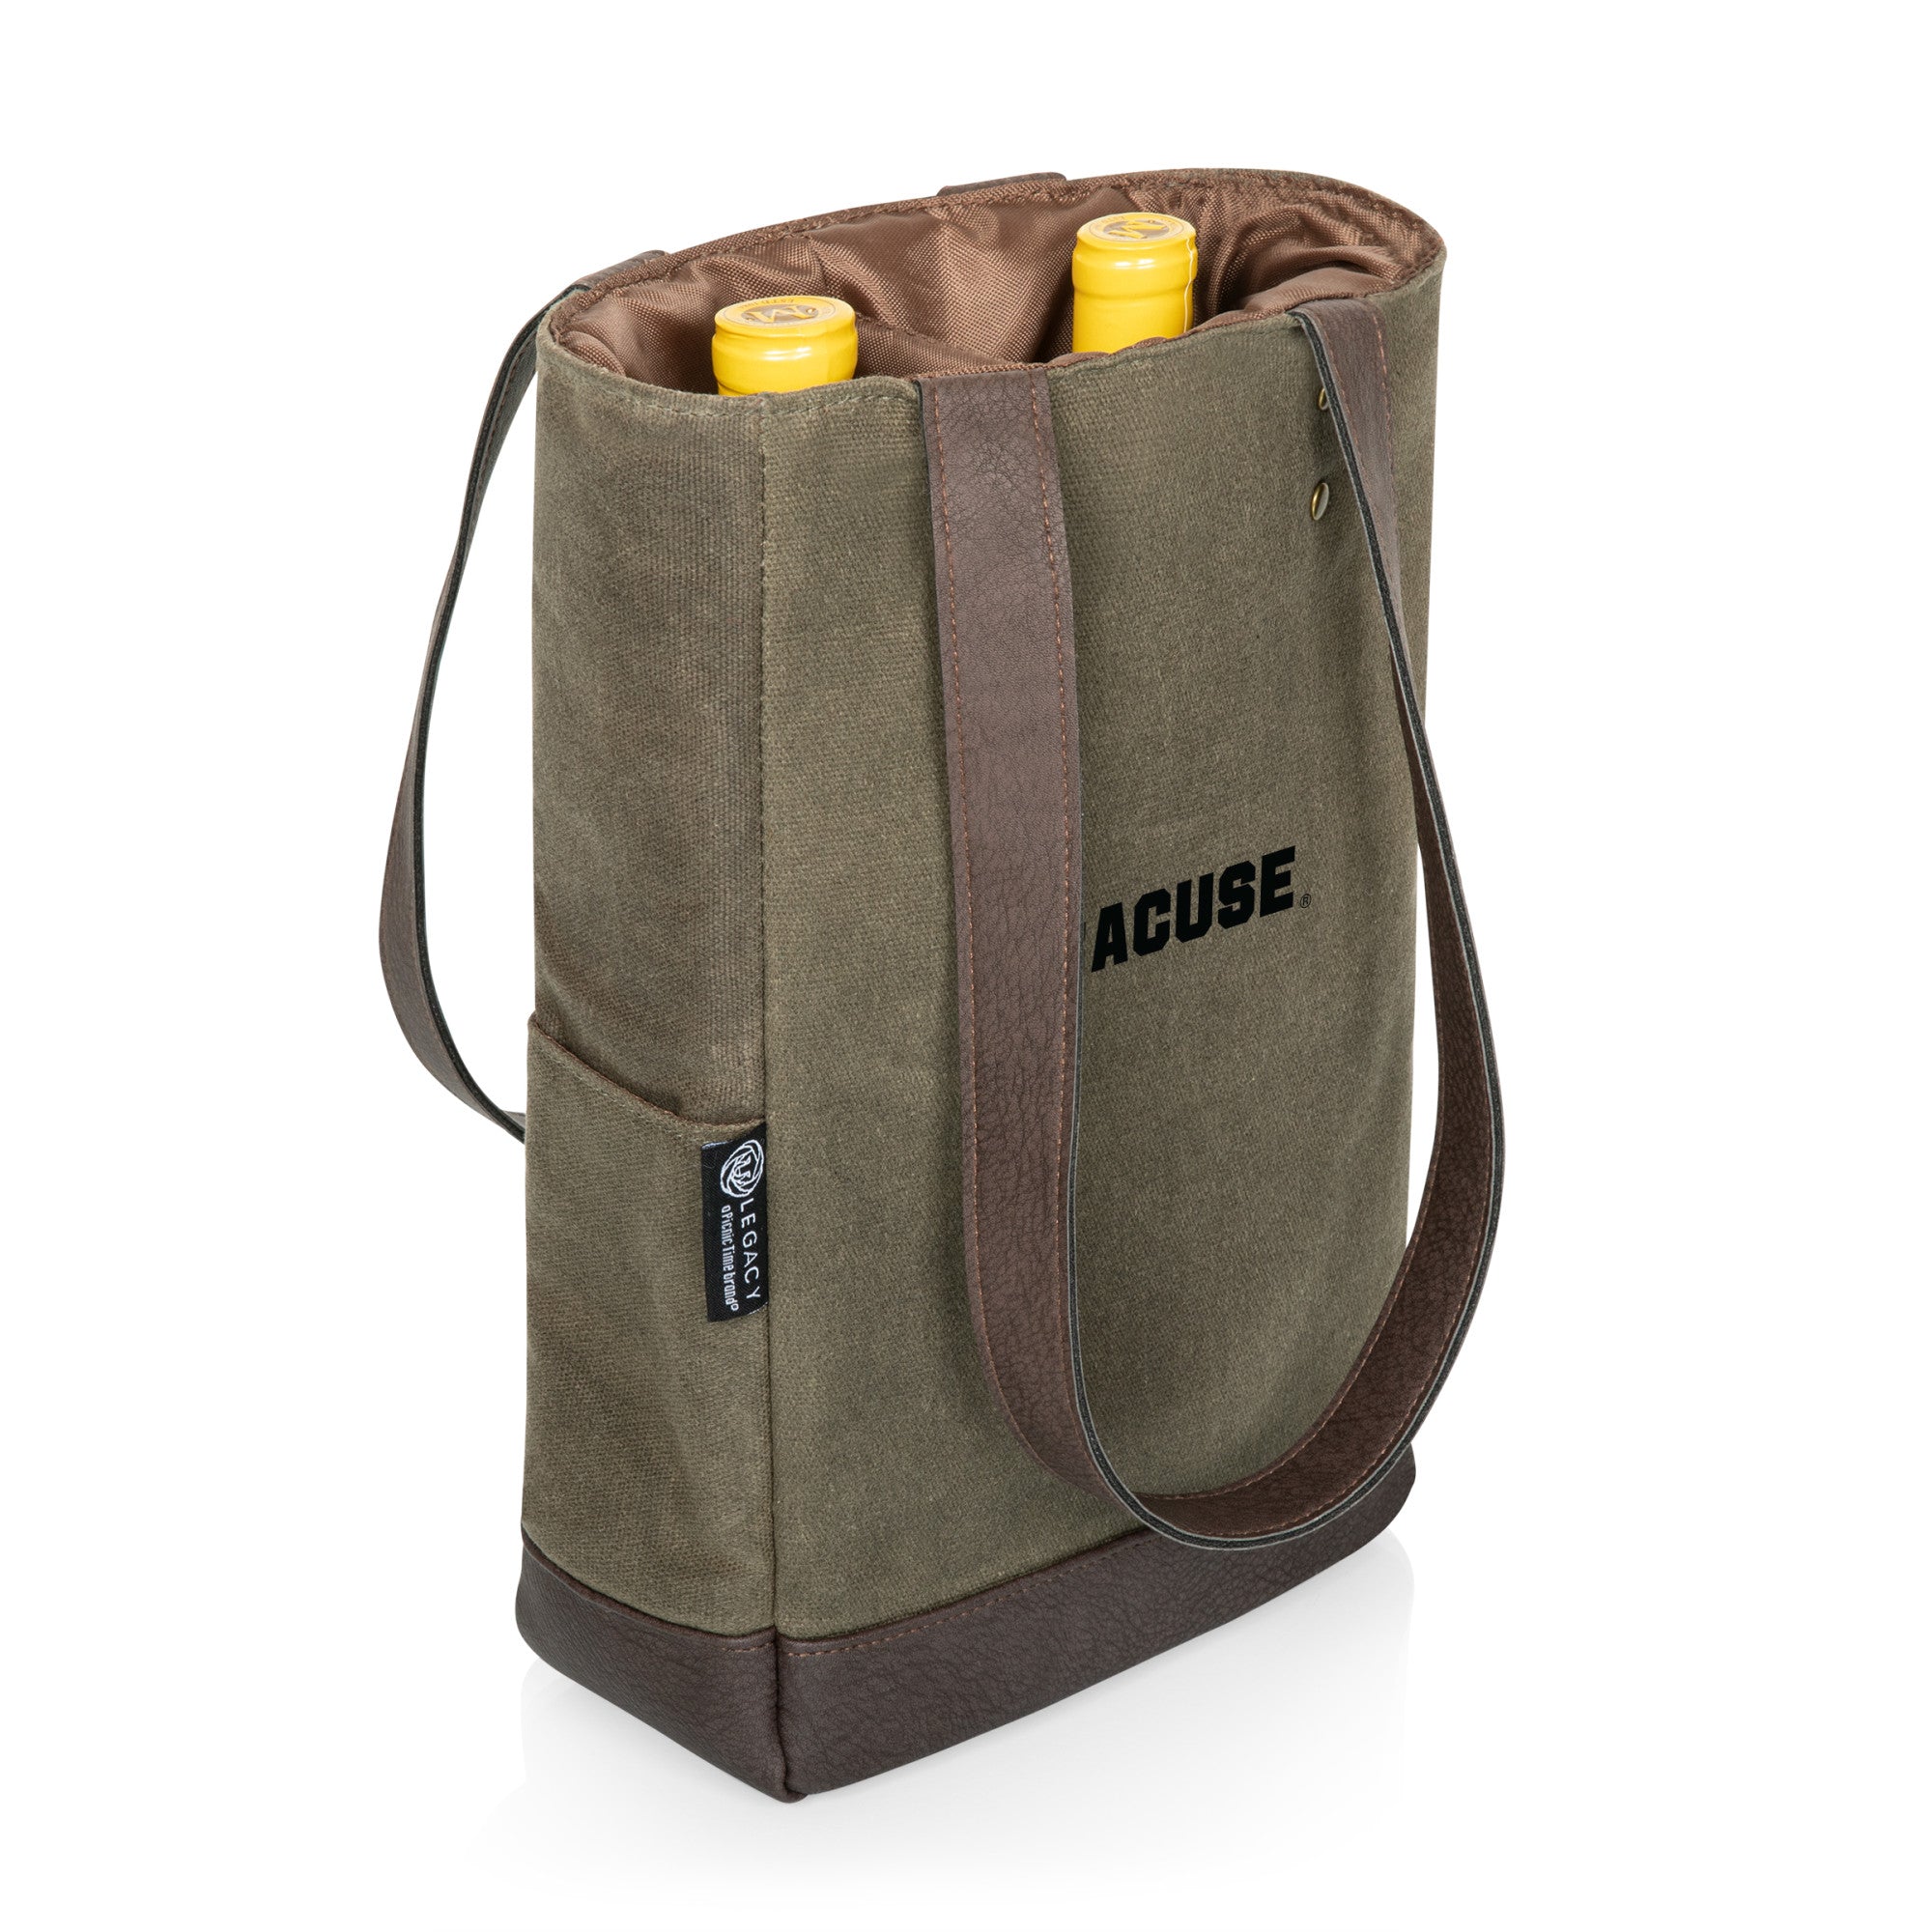 Syracuse Orange - 2 Bottle Insulated Wine Cooler Bag